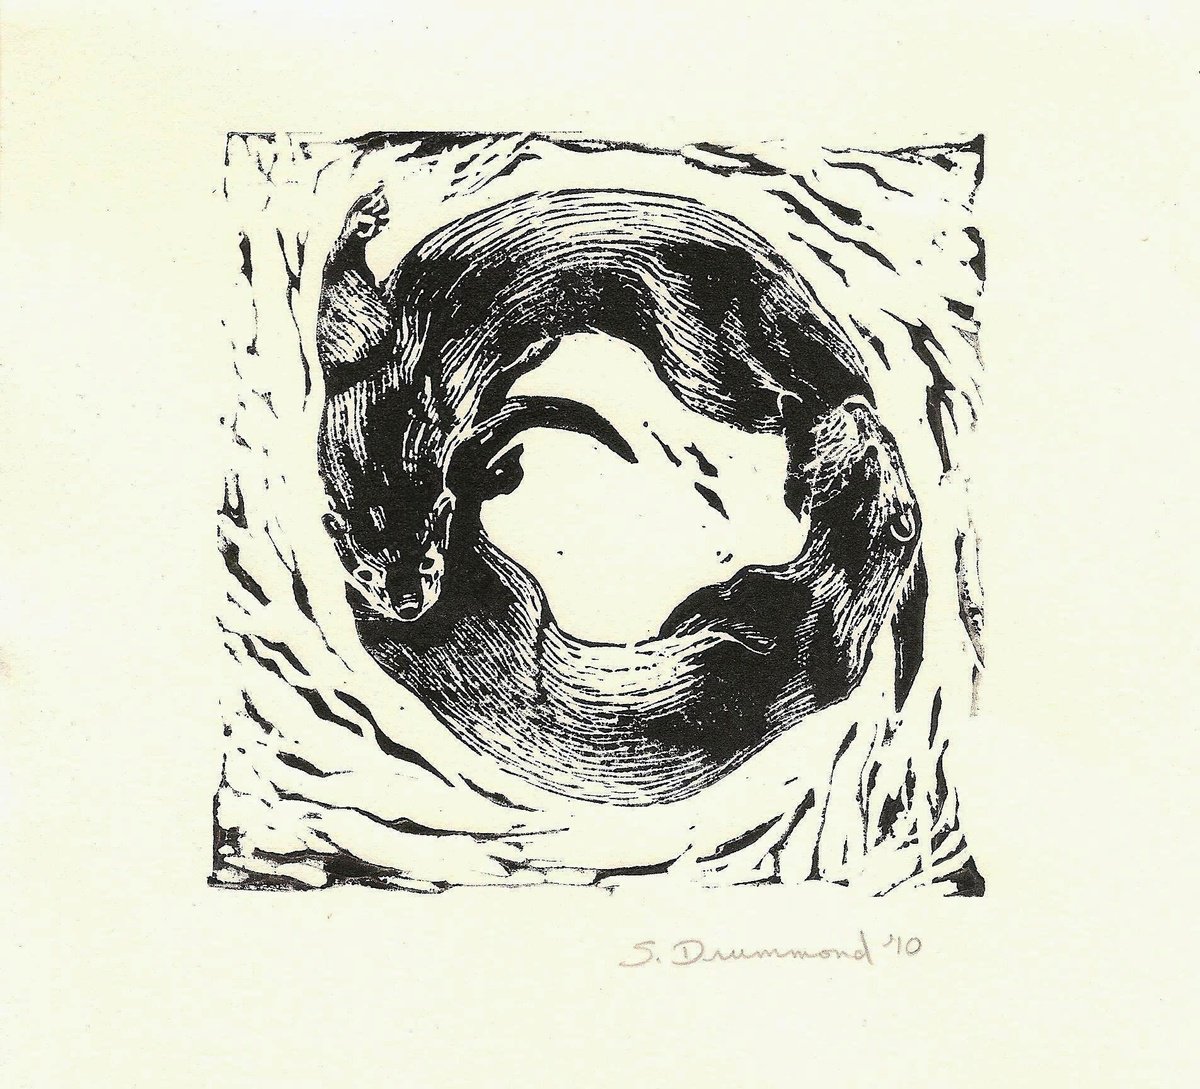 Otter Yin/Yang by Sarah Drummond